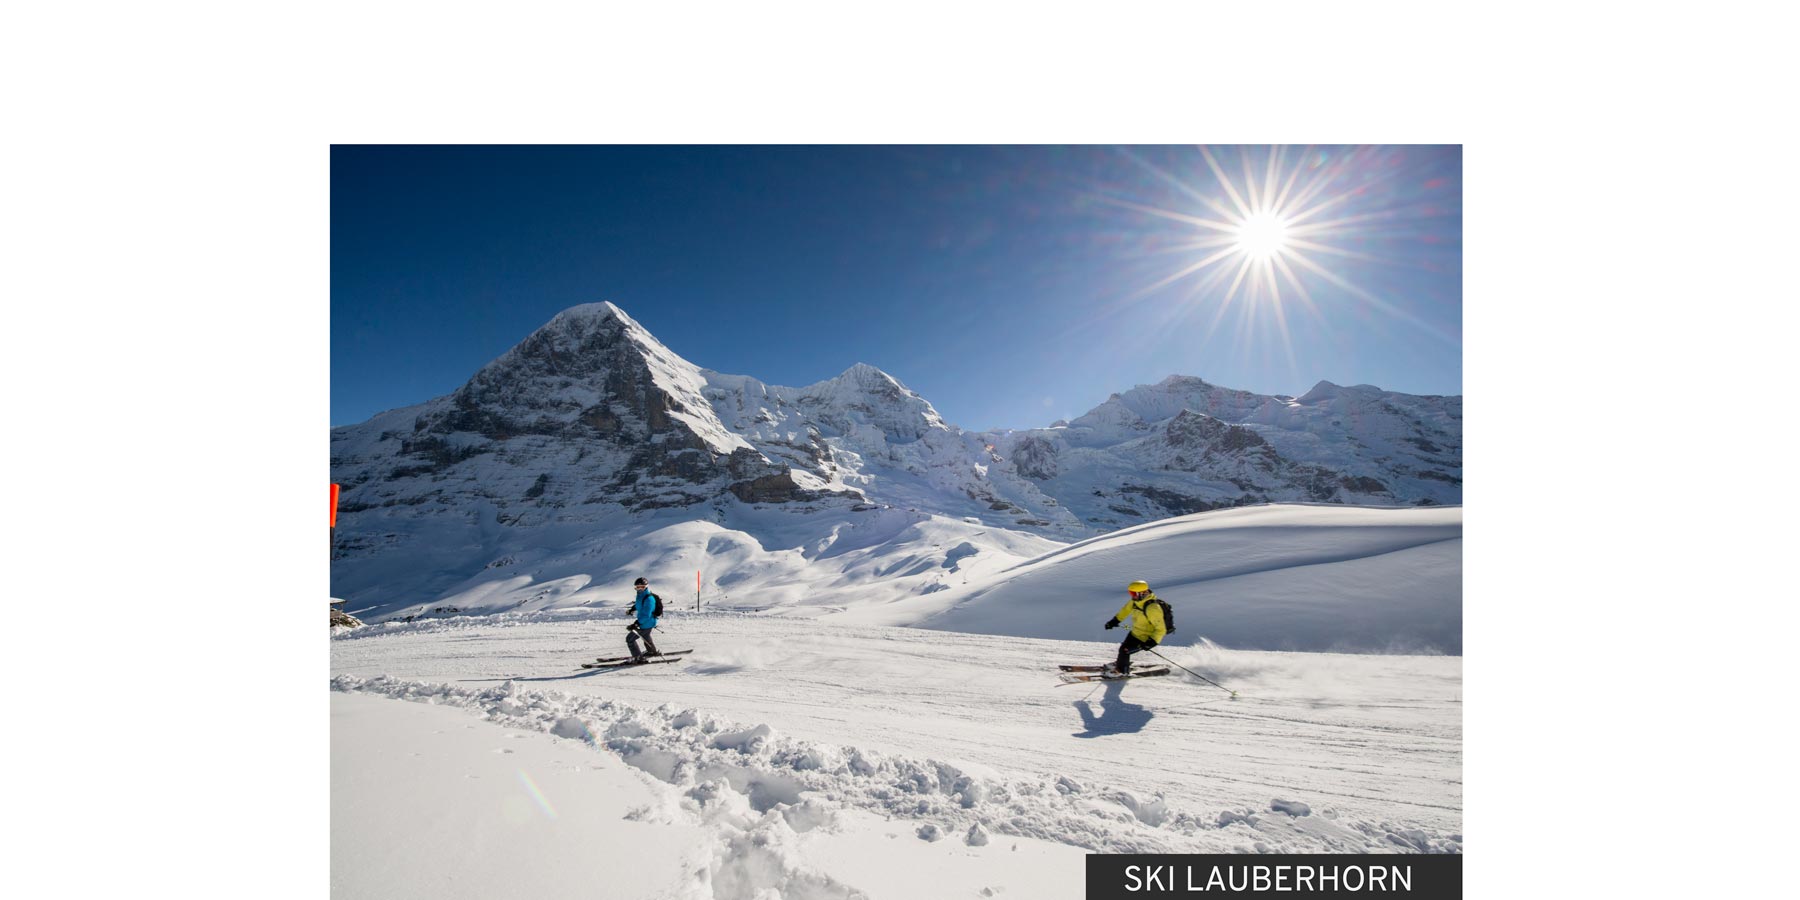 Ski-lauberhorn